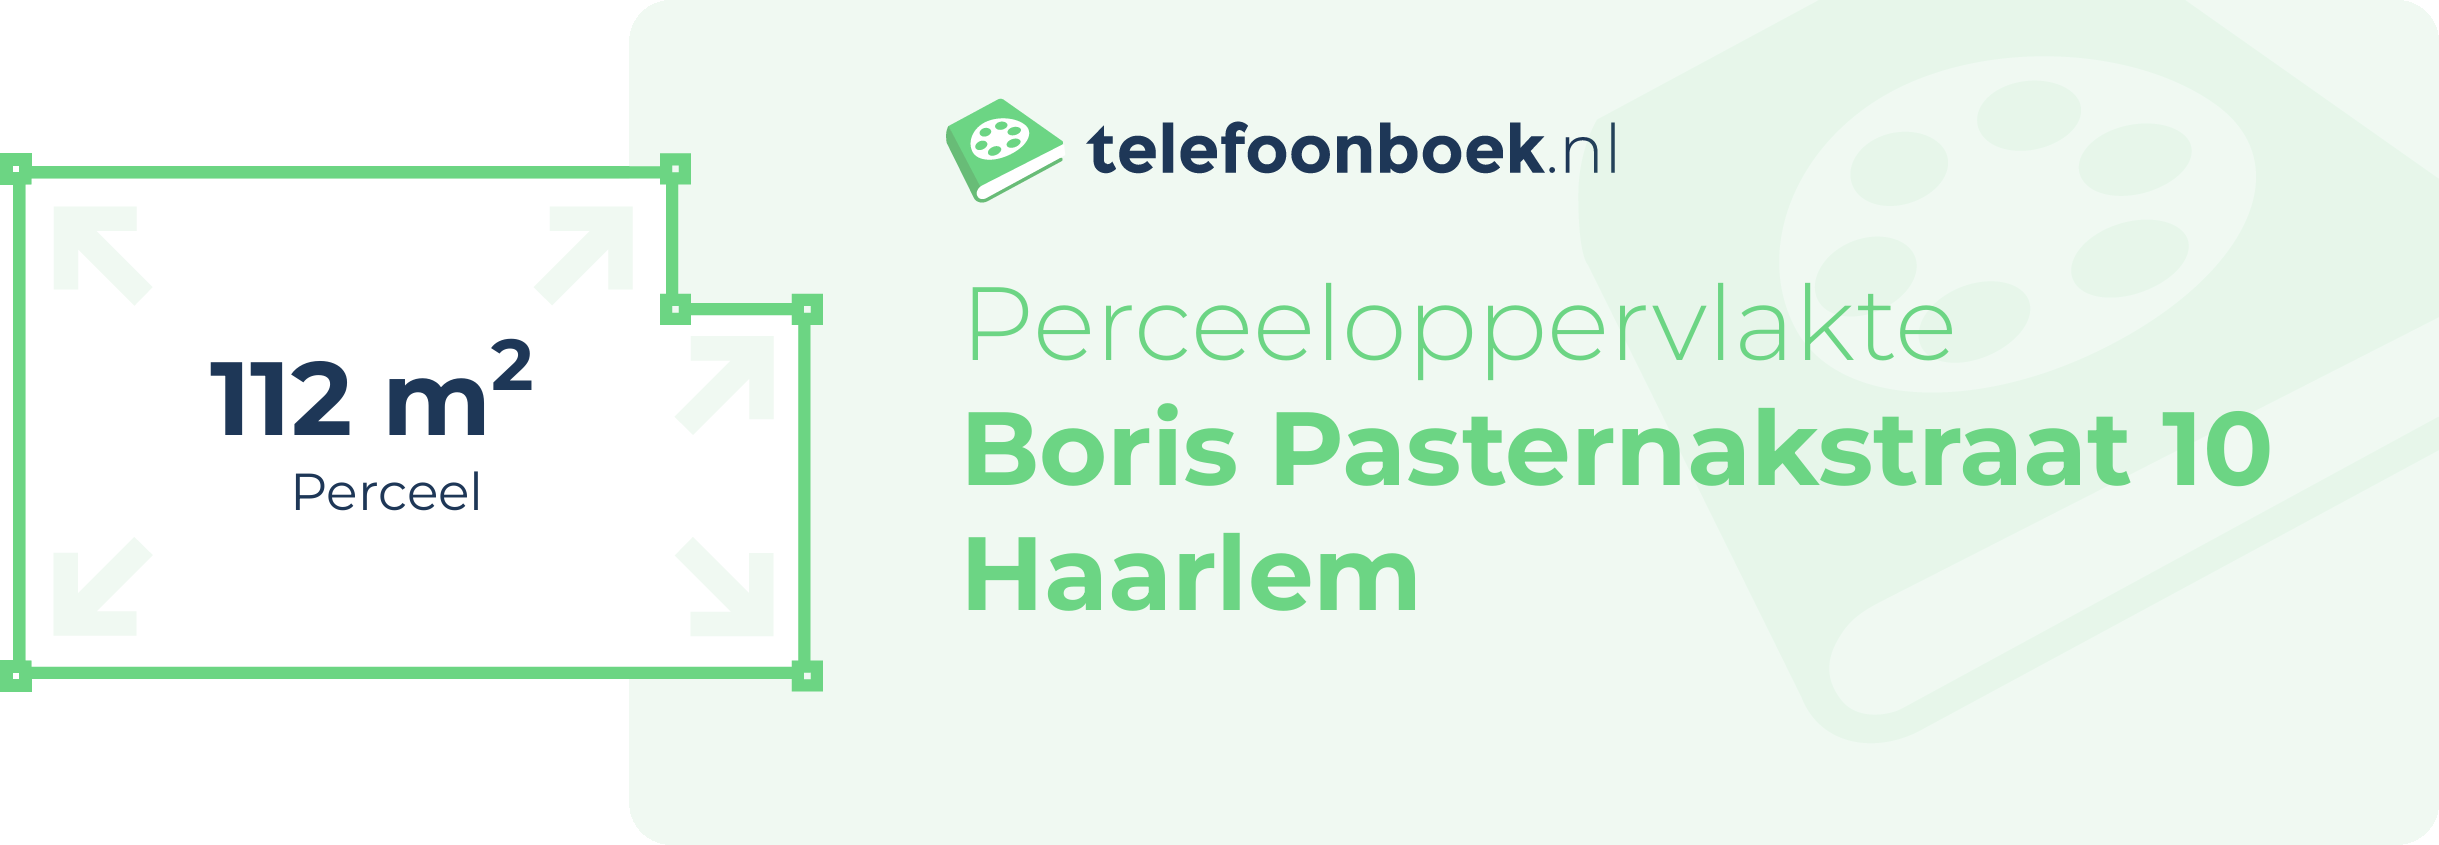 Perceeloppervlakte Boris Pasternakstraat 10 Haarlem